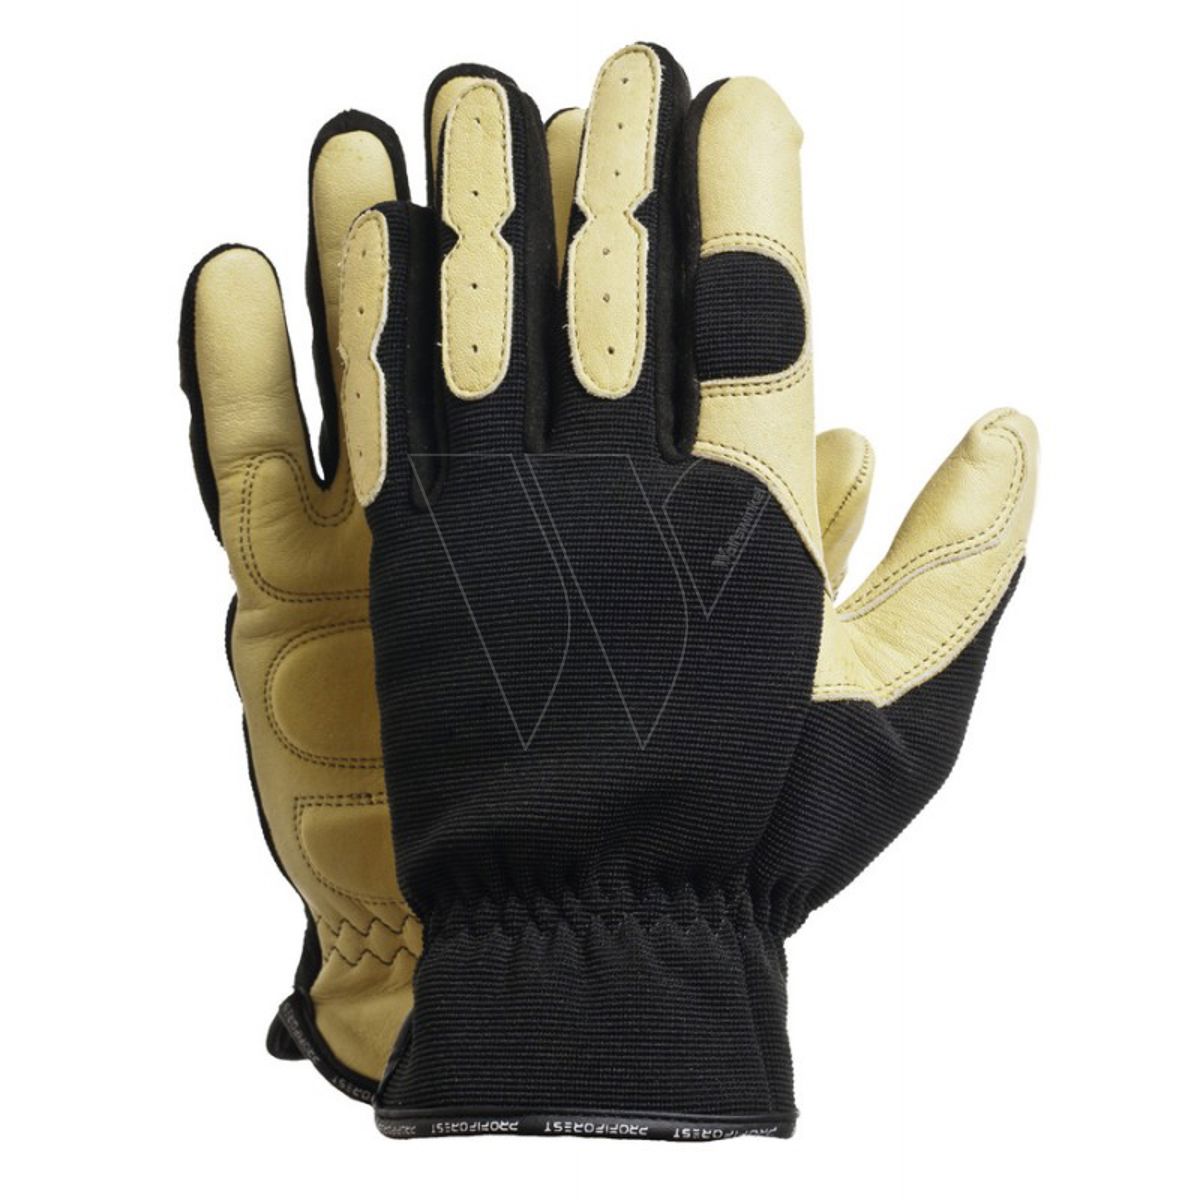 Profiforest antivibration glove 10